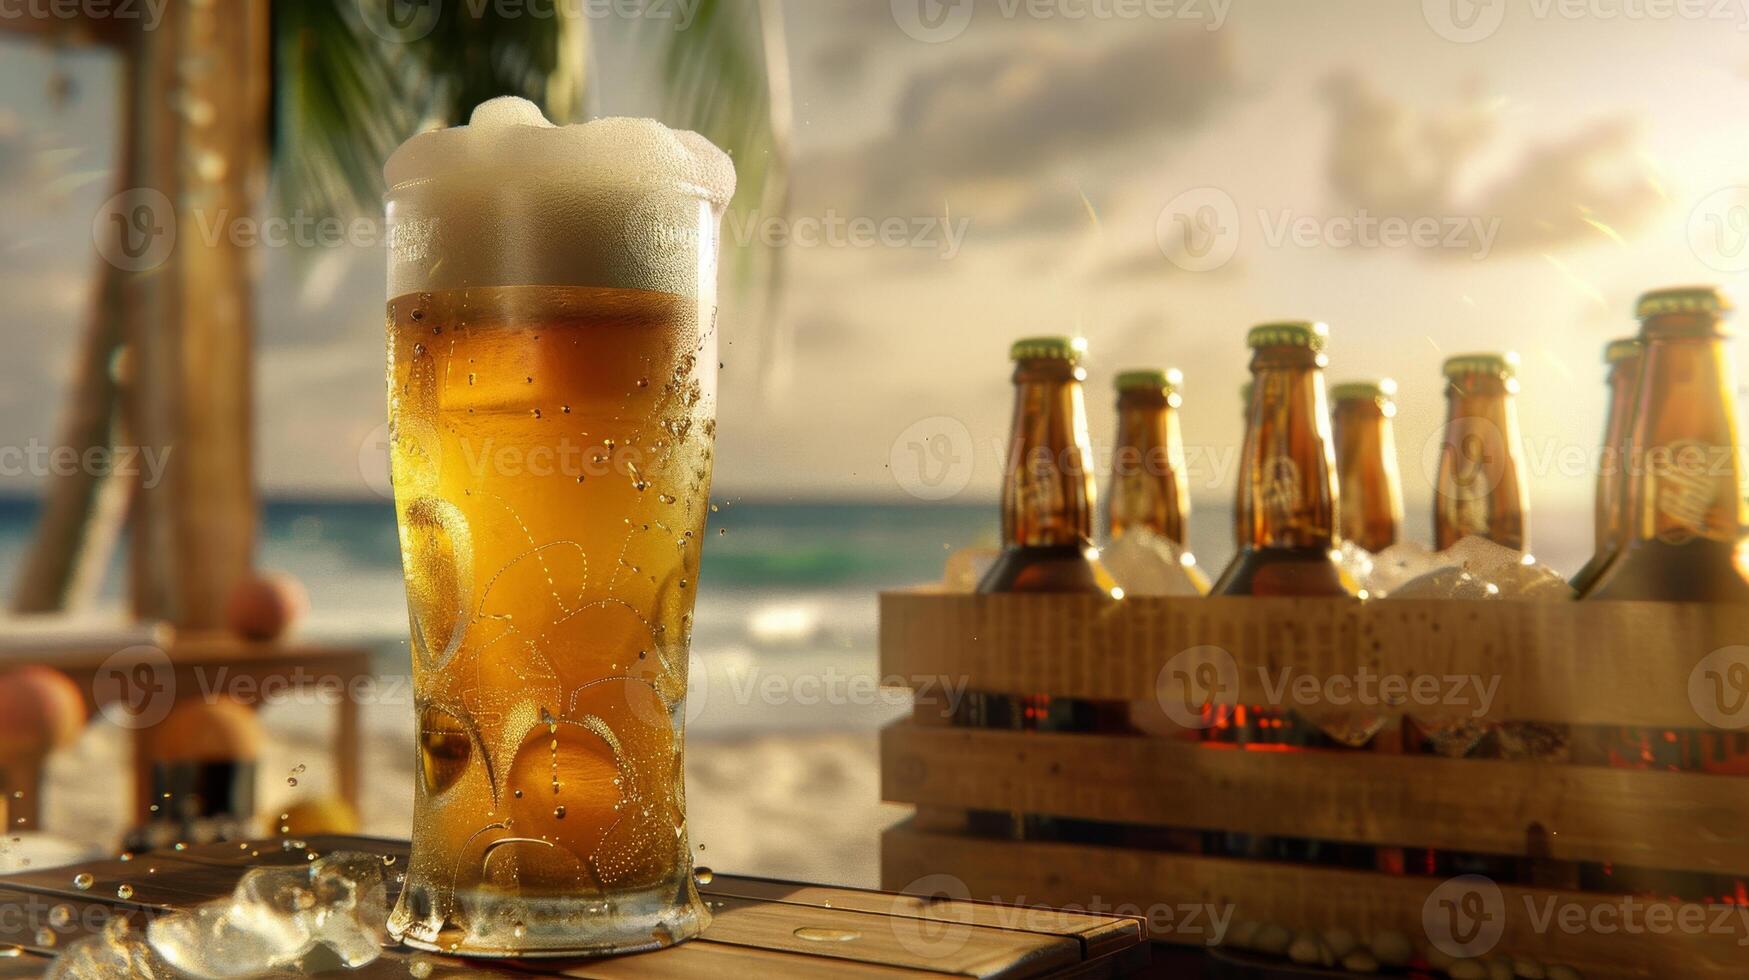 glas av öl med is kuber på trä- tabell på tropisk strand på solnedgång foto